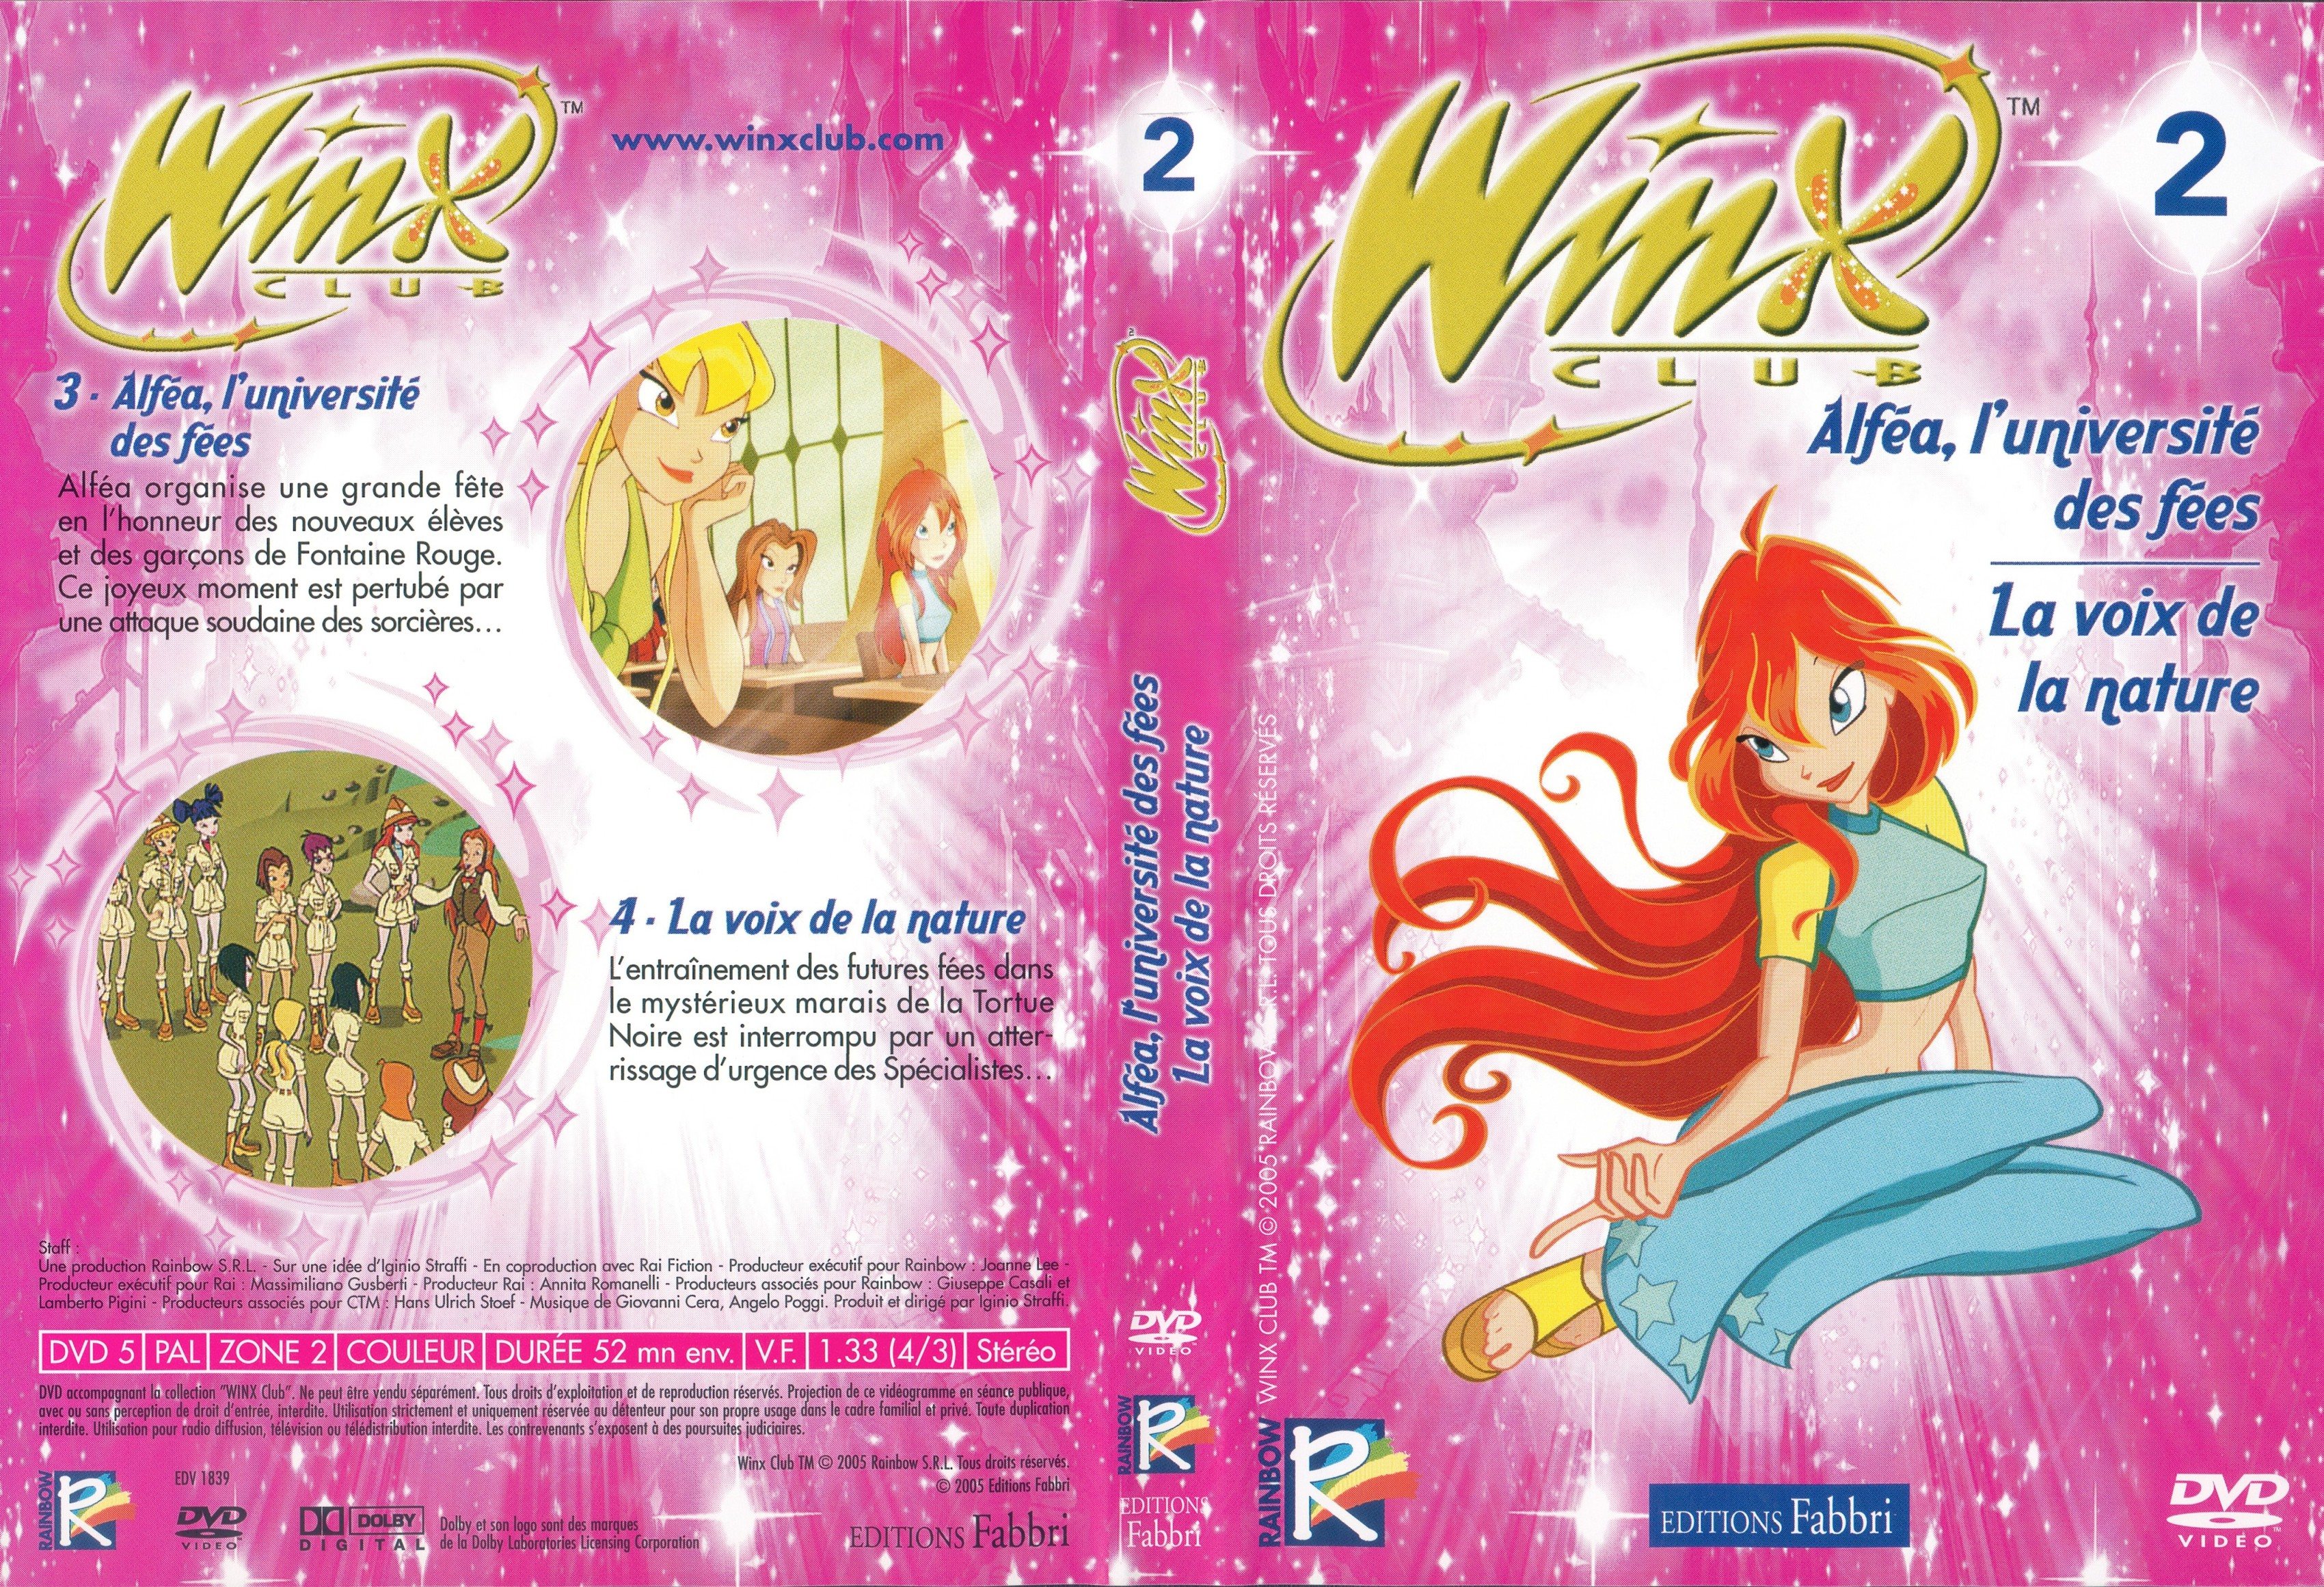 Jaquette DVD Winx Club vol 2